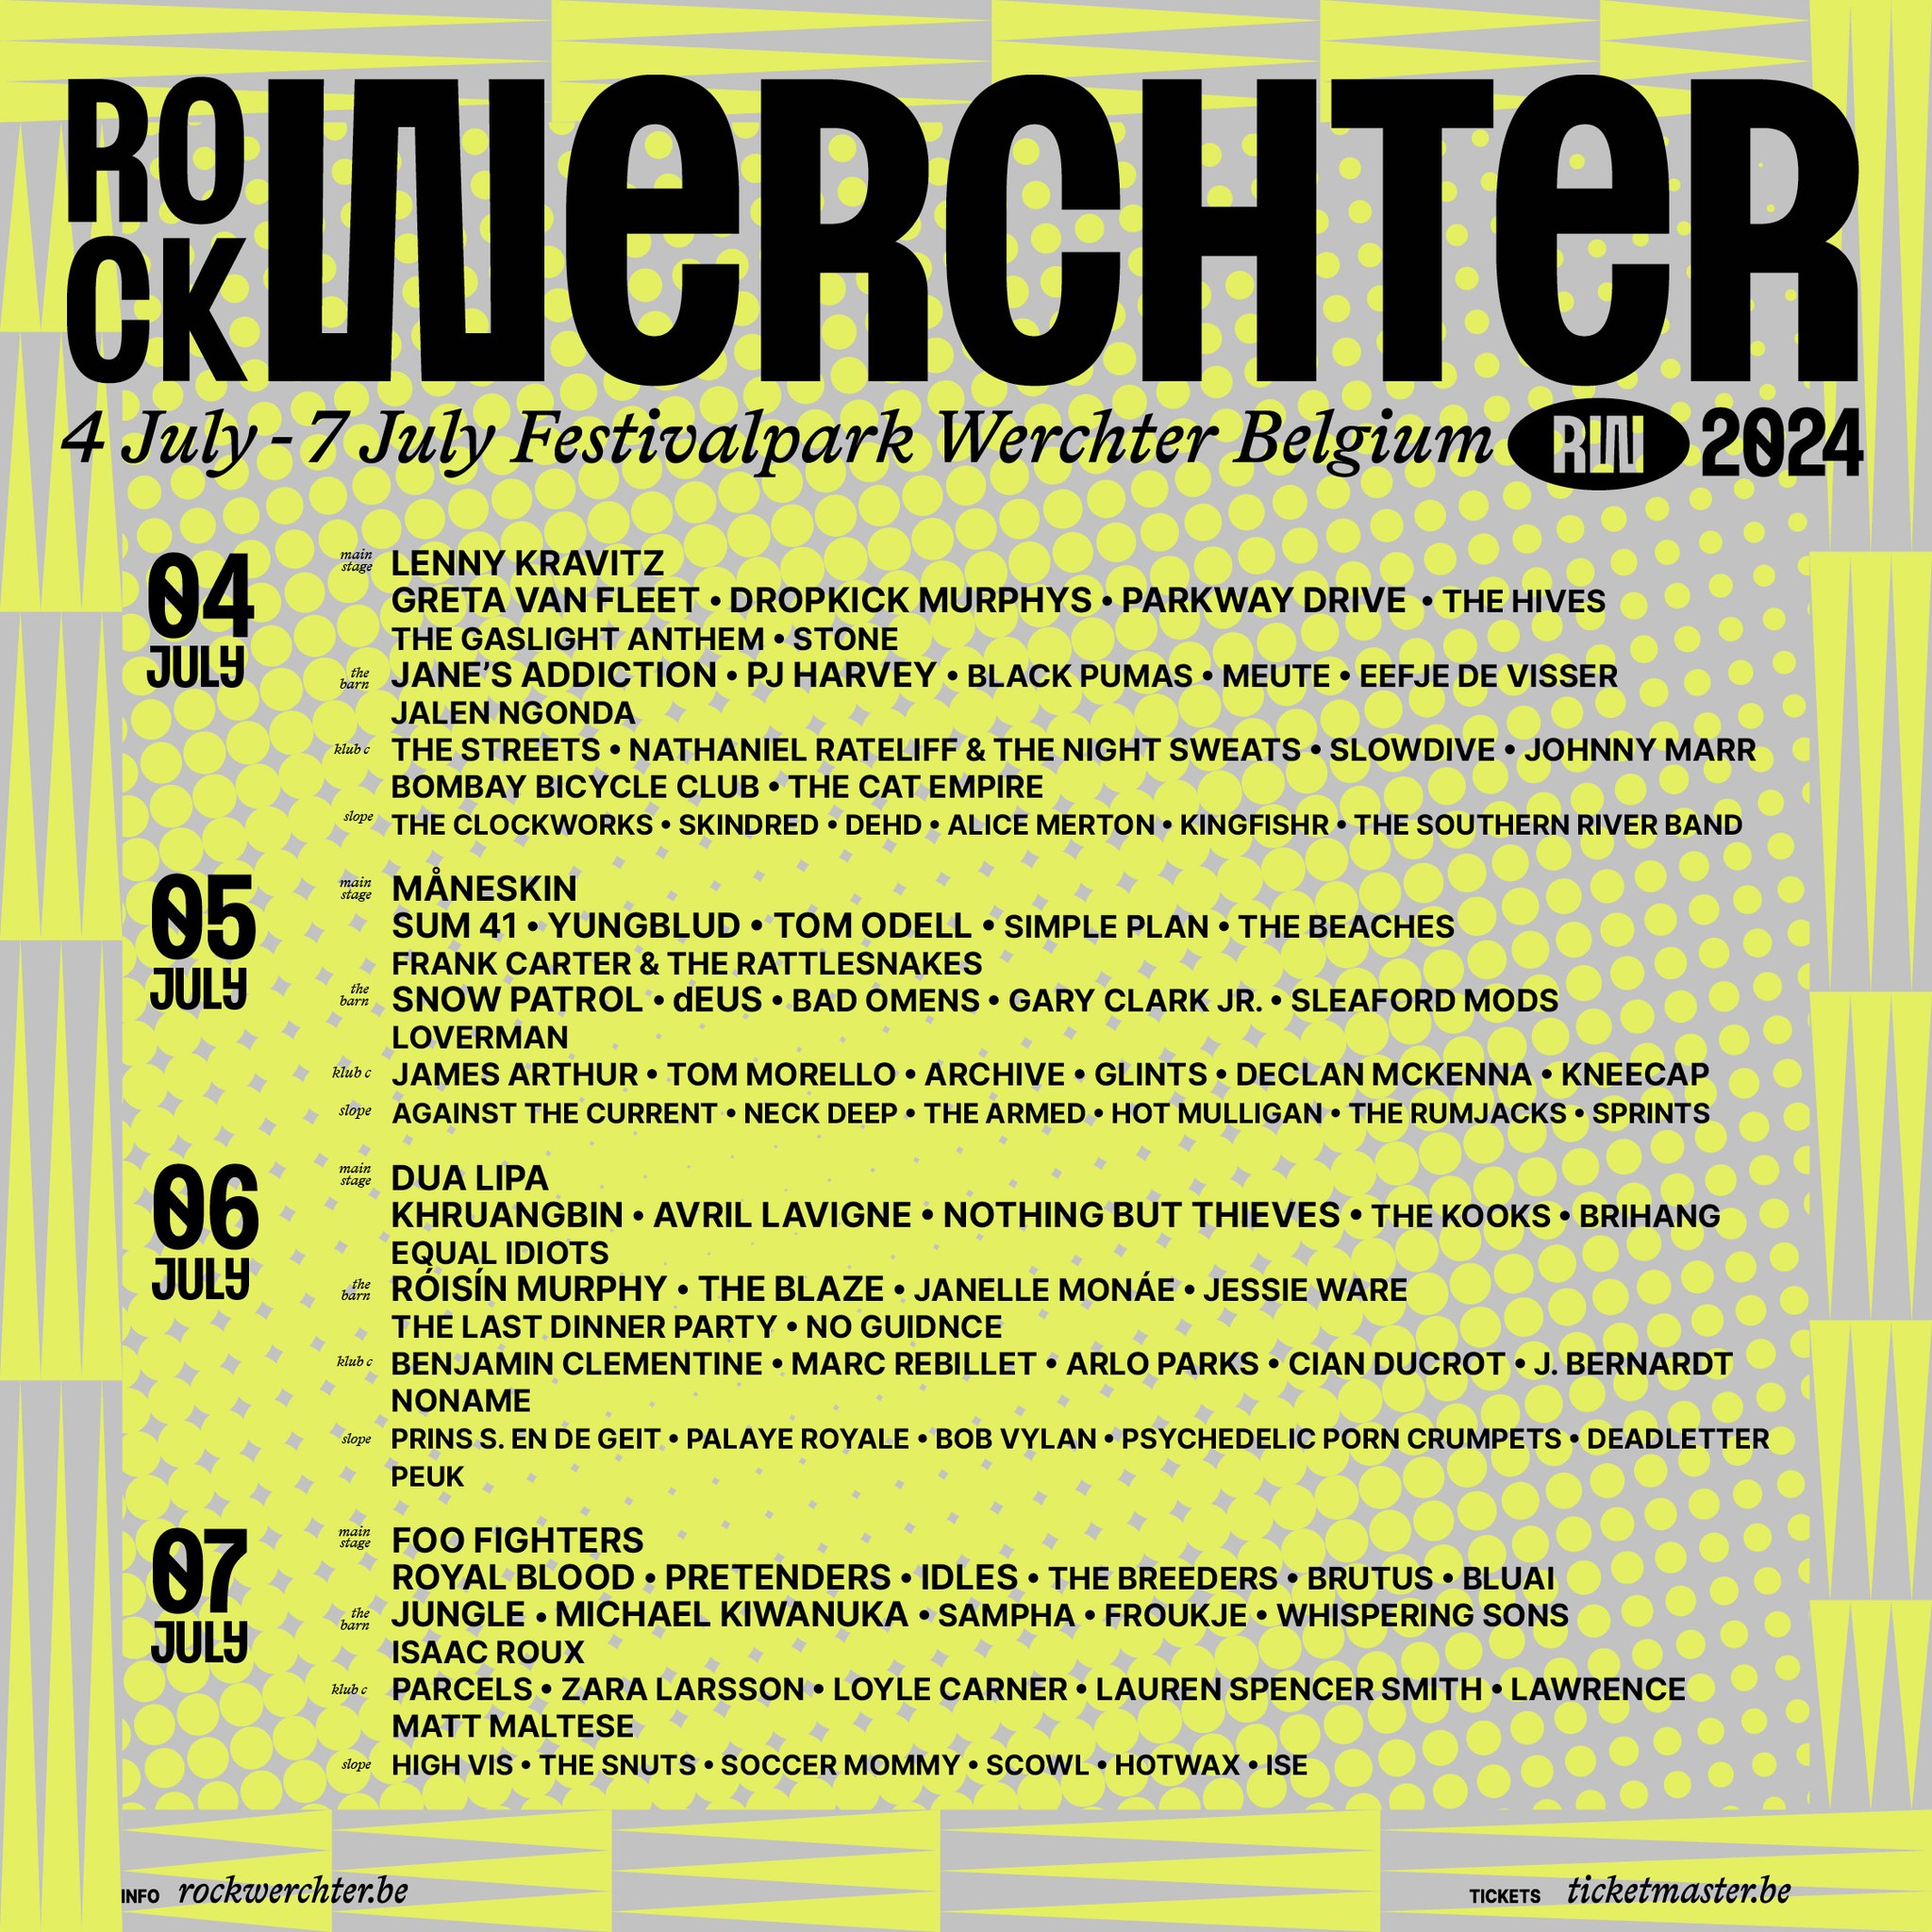 Cartel completo del Rock Werchter 2024